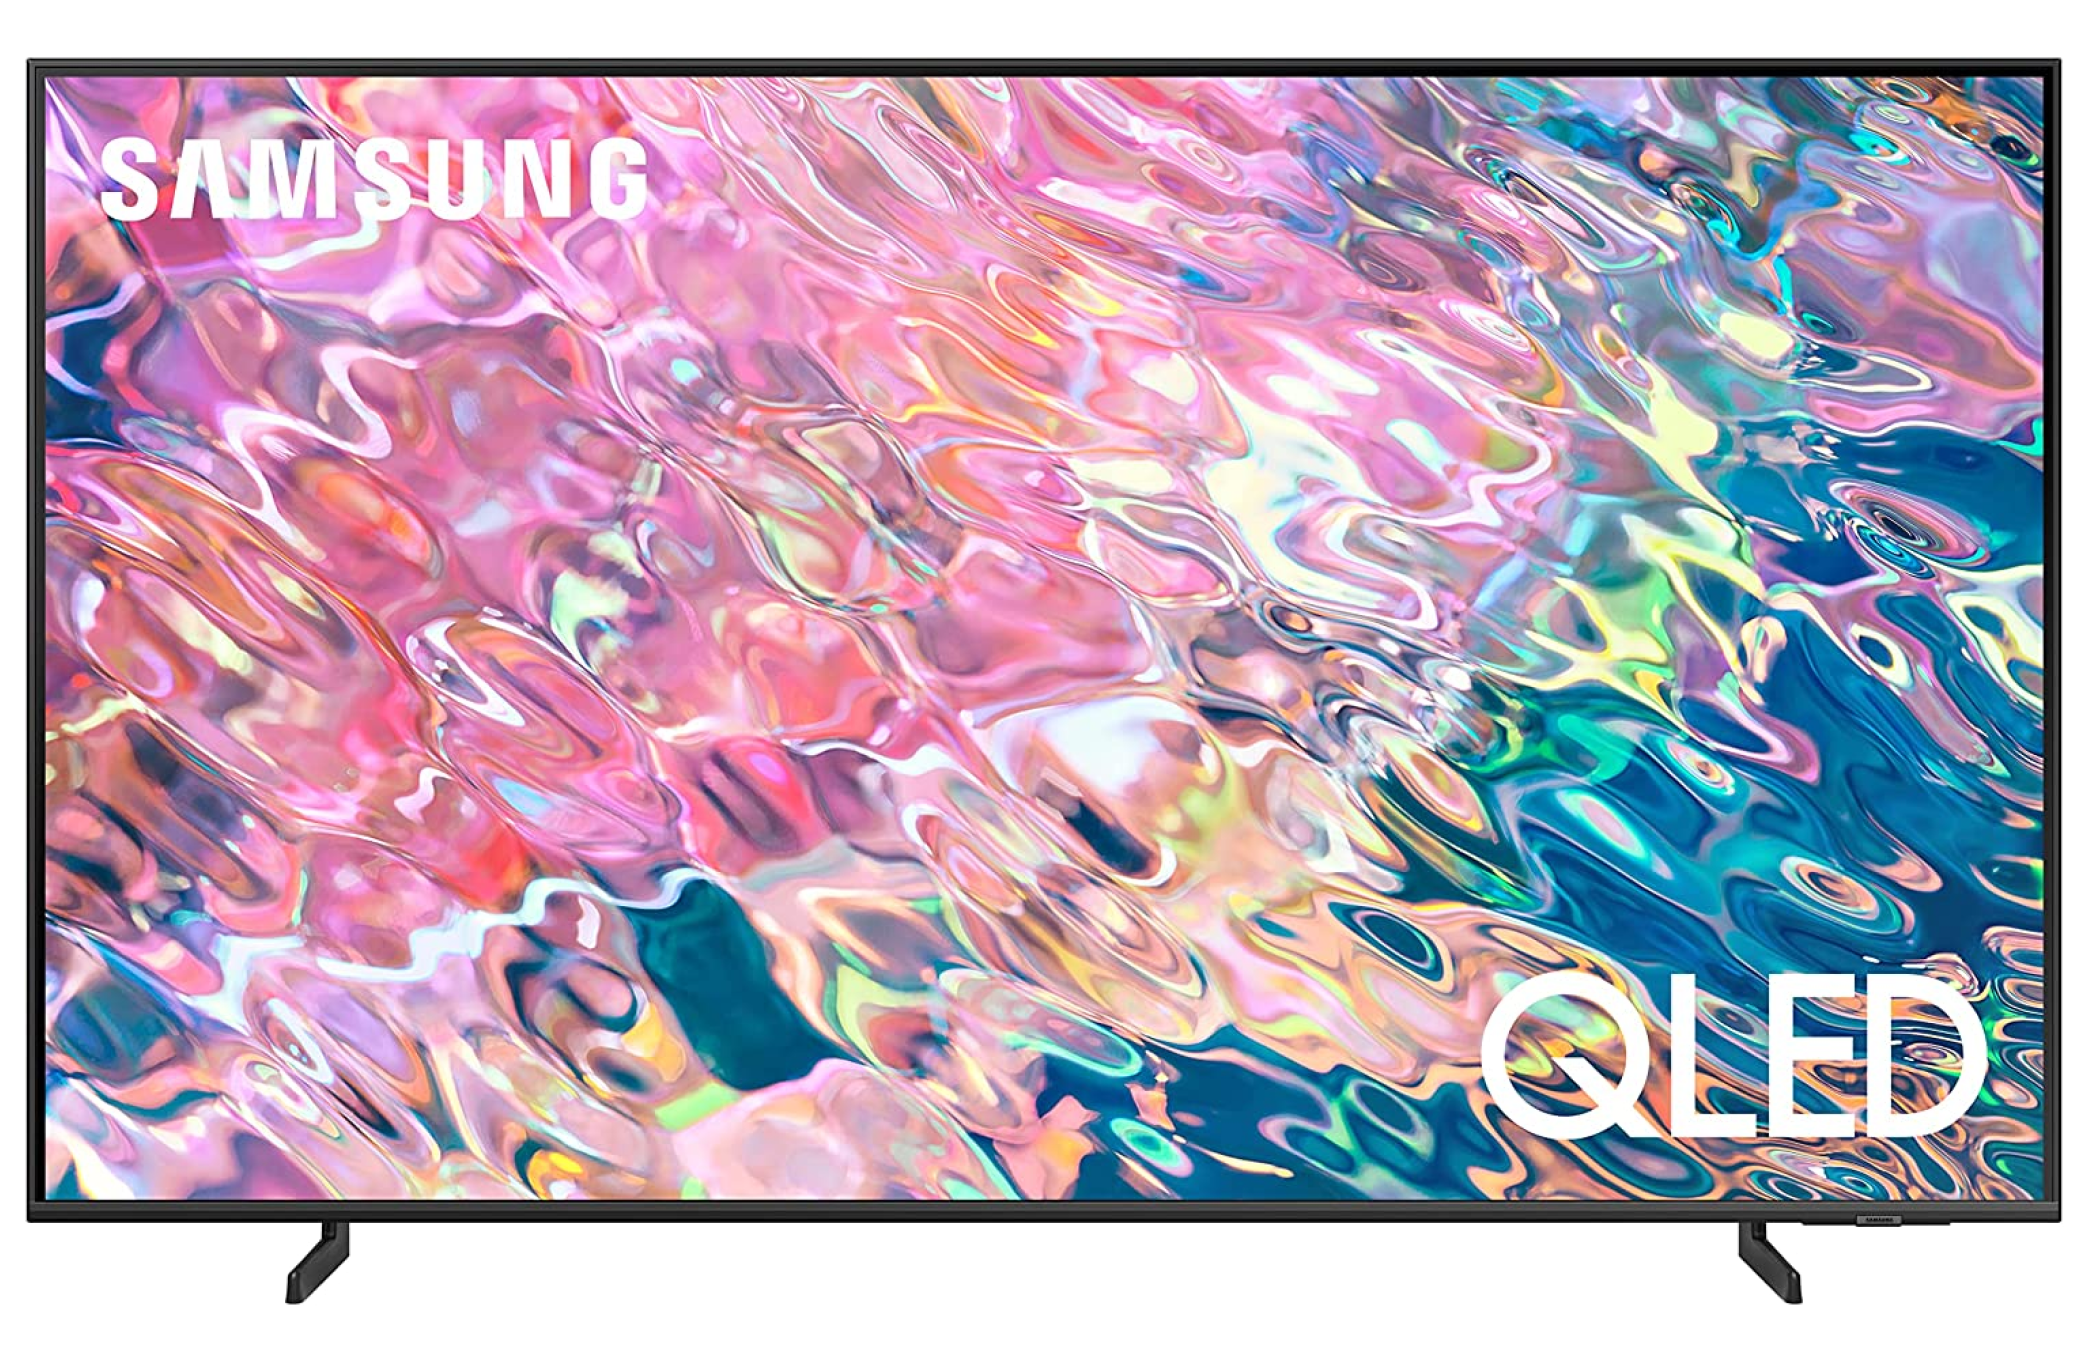 SAMSUNG 55-Inch Class QLED Q60B Series - 4K UHD Dual LED Quantum HDR Smart TV with Alexa Built-in (QN55Q60BAFXZA)